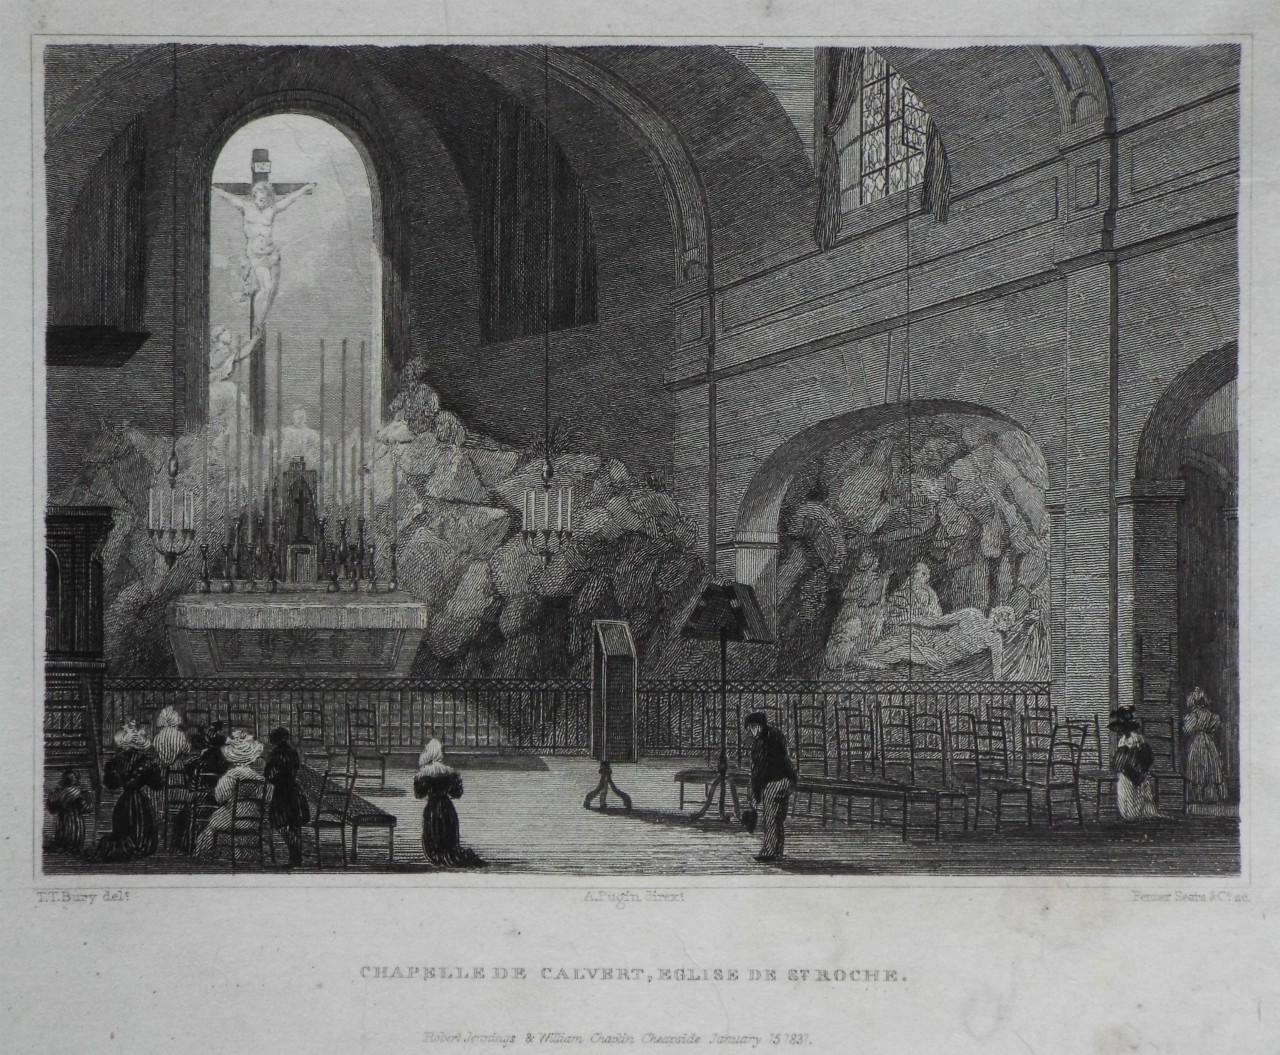 Print - Chapelle de Calvert, Eglise de St. Roche. - Fenner